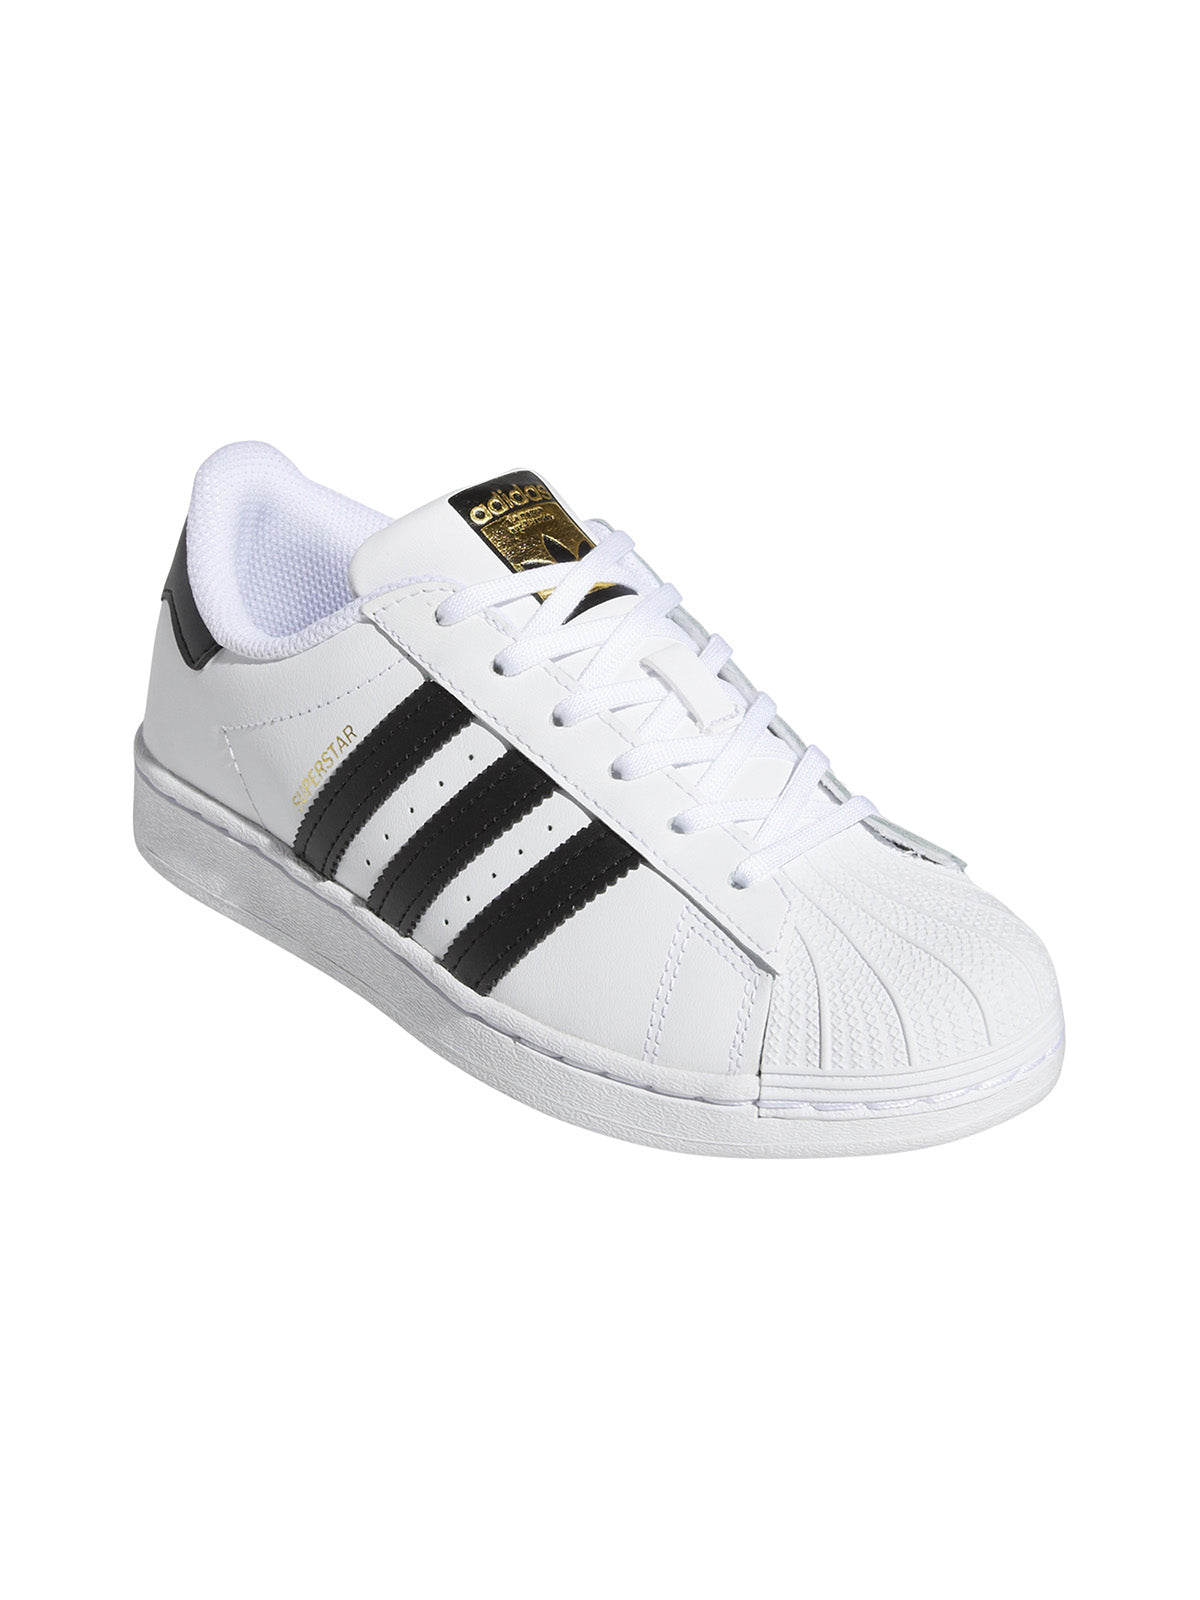 Adidas Unisex Kids Sneaker - Adidas Superstar C - White